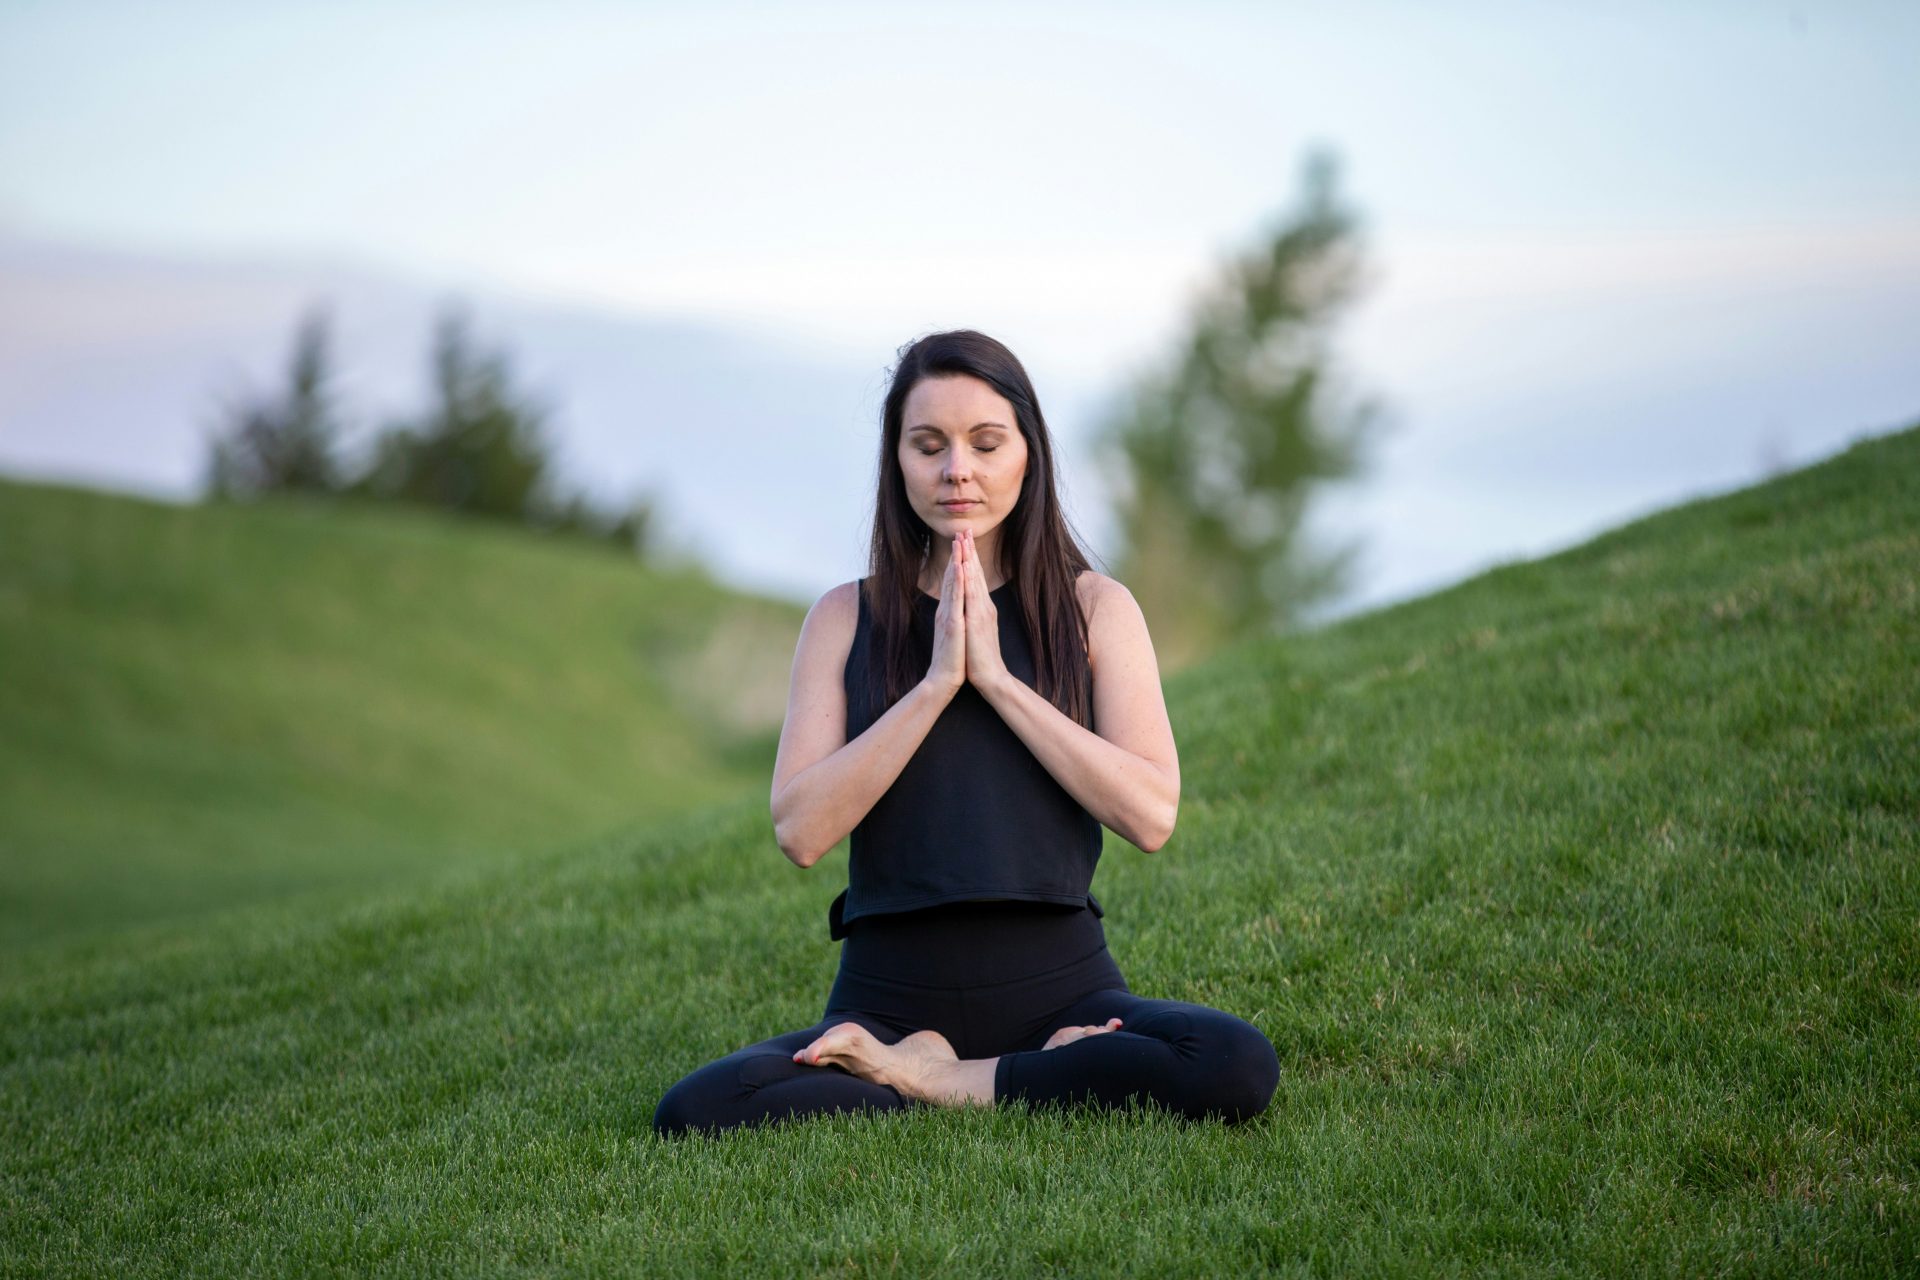 Meditativer Aspekt der Übungen